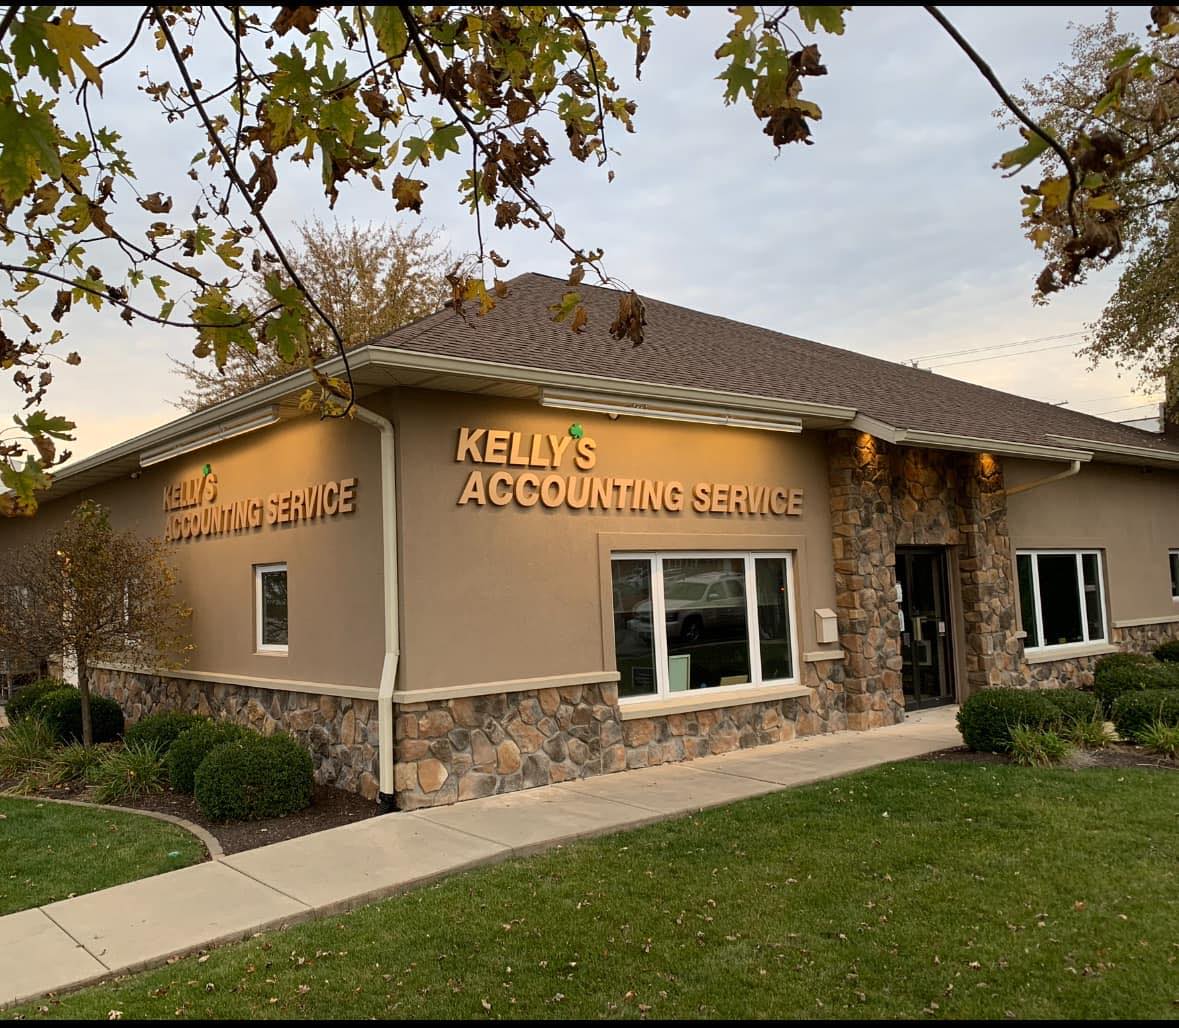 Kelly’s Accounting Service, Inc. 310 W Washington St, Monticello Illinois 61856